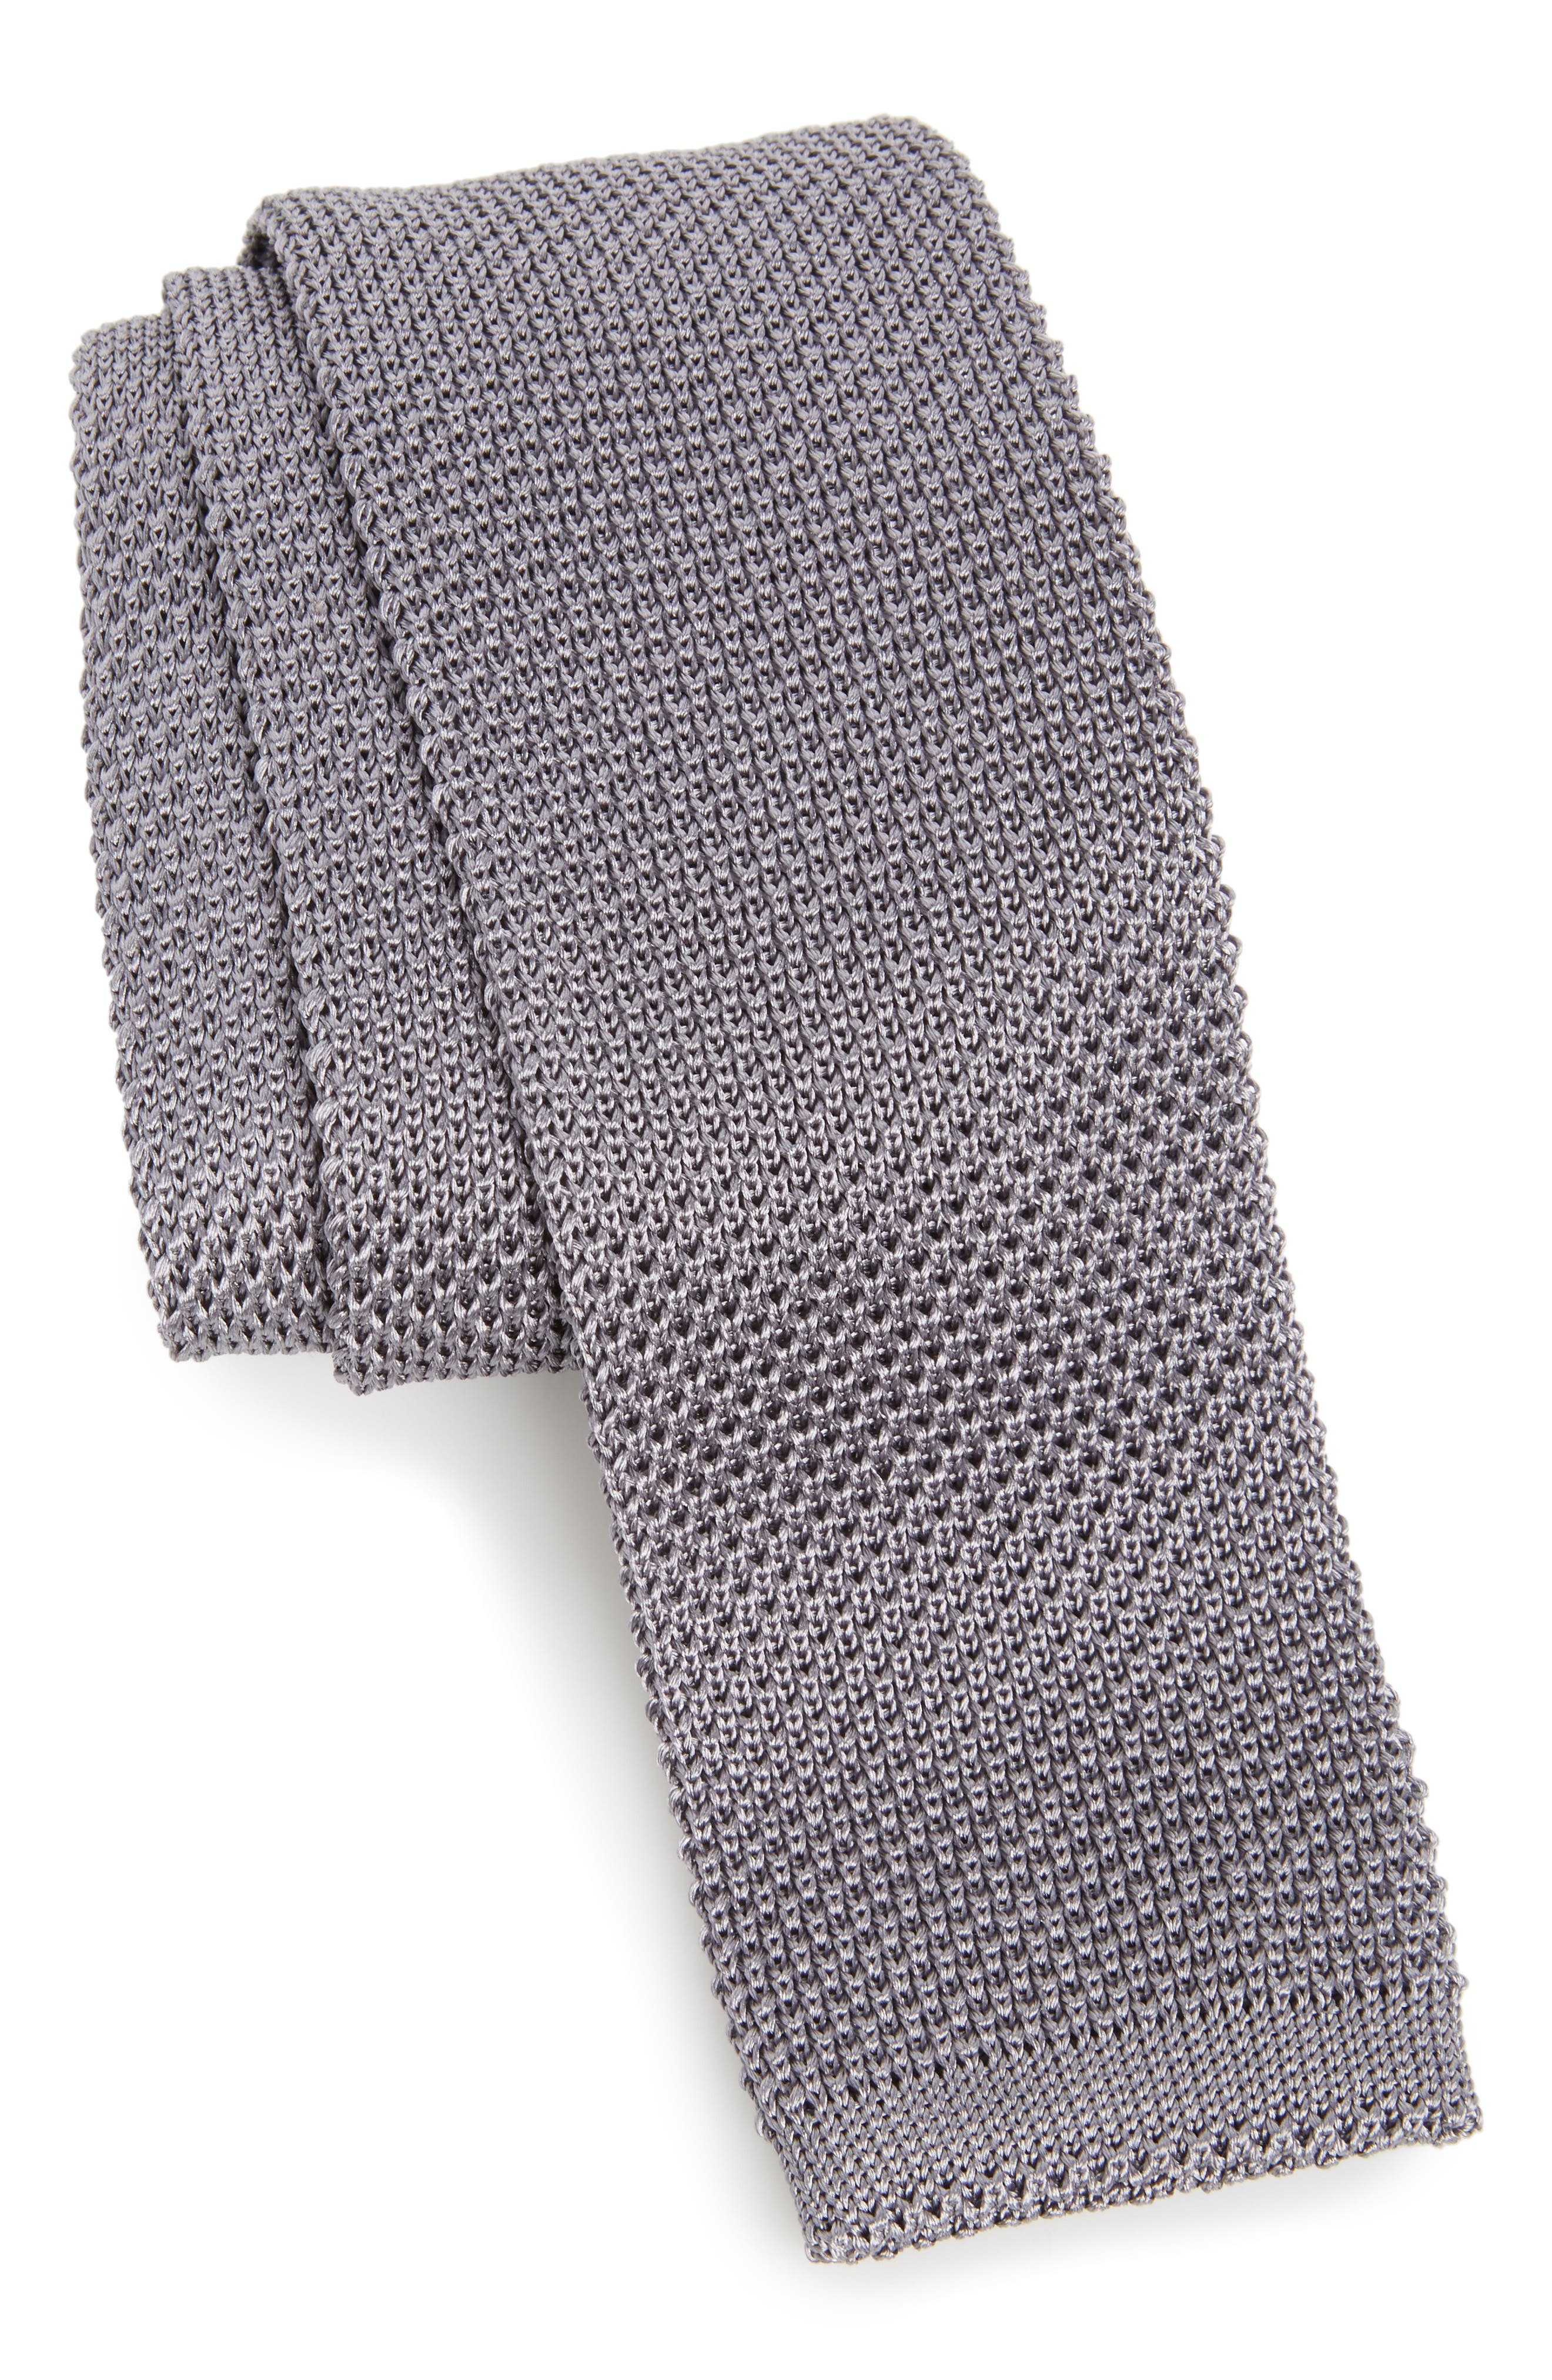 Men\u2019s Accessories Gift For Him Gift For Dad Designer Tie 100/% Silk Vintage Tie 2 Nordstrom Silk Ties Vintage Neckties